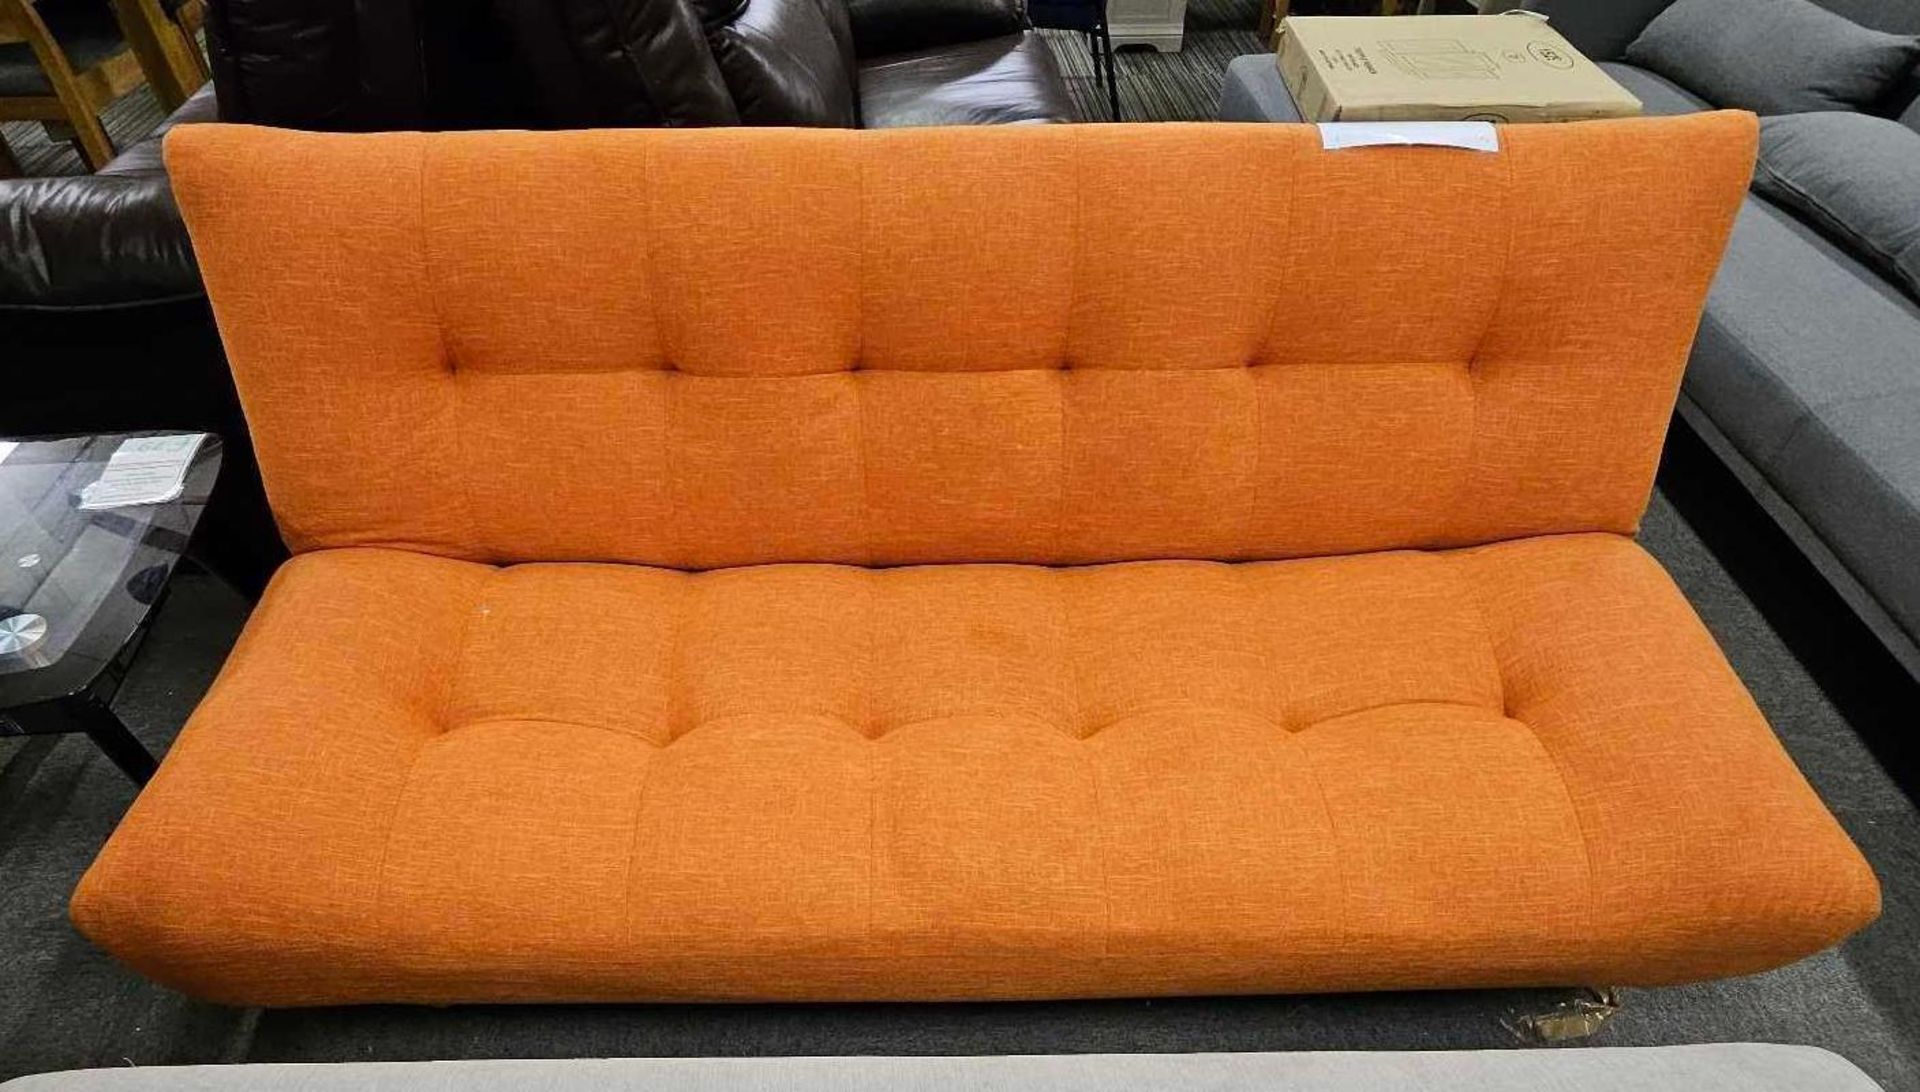 *EX DISPLAY* Habitat kota clic clac heavy duty 3 seater fabric sofa bed in orange. RRP: £525.00 - Image 4 of 5